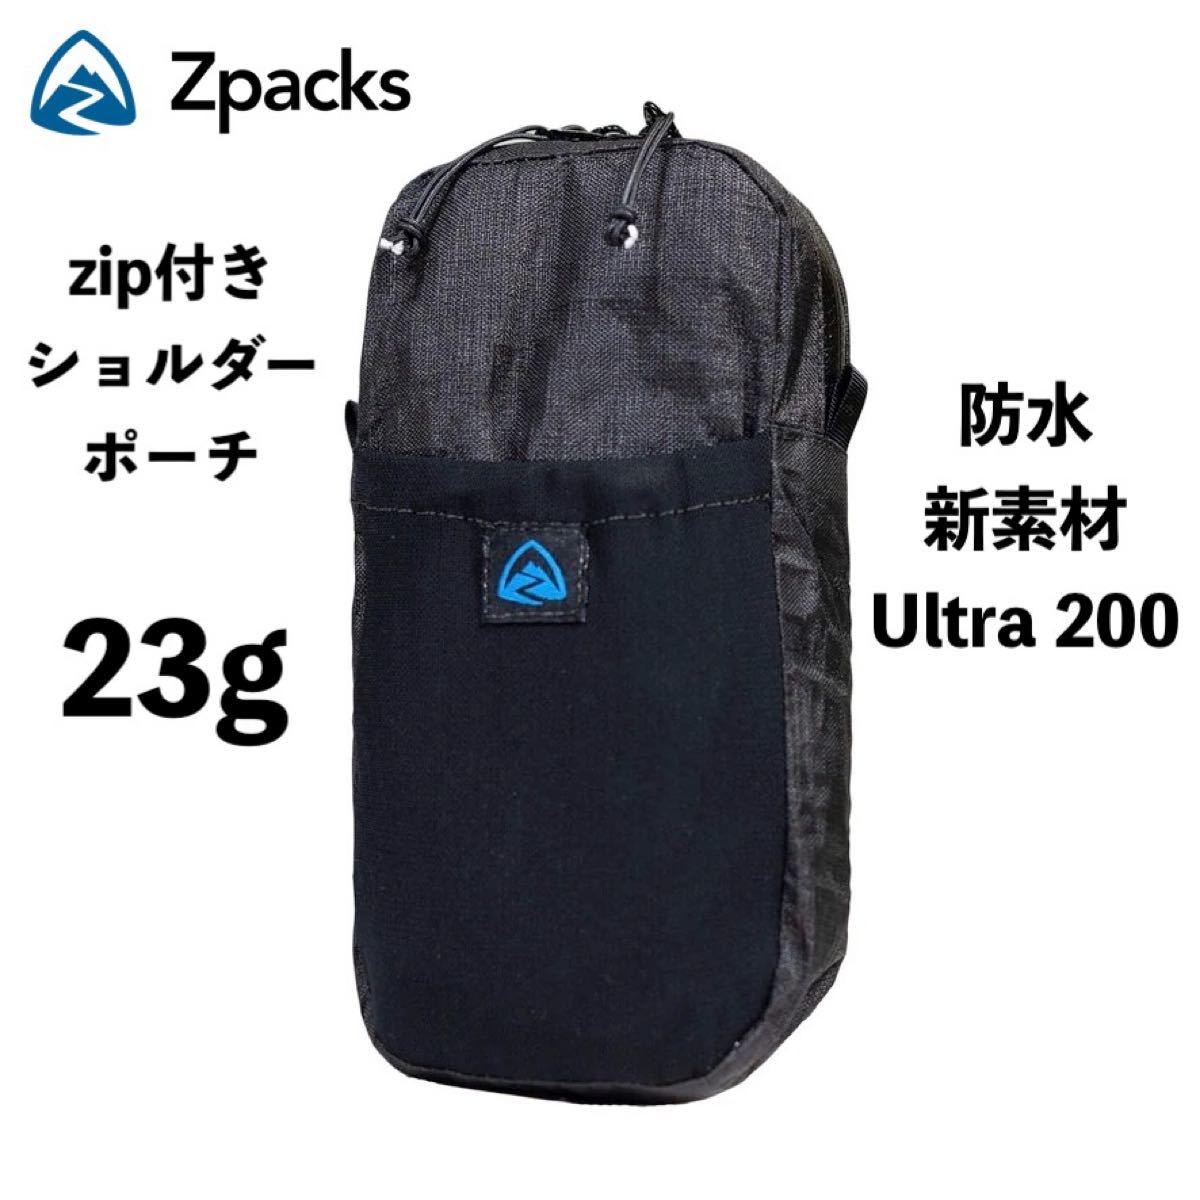 Zpacks ジップ付きショルダーポーチ Ultra 200 防水新素材